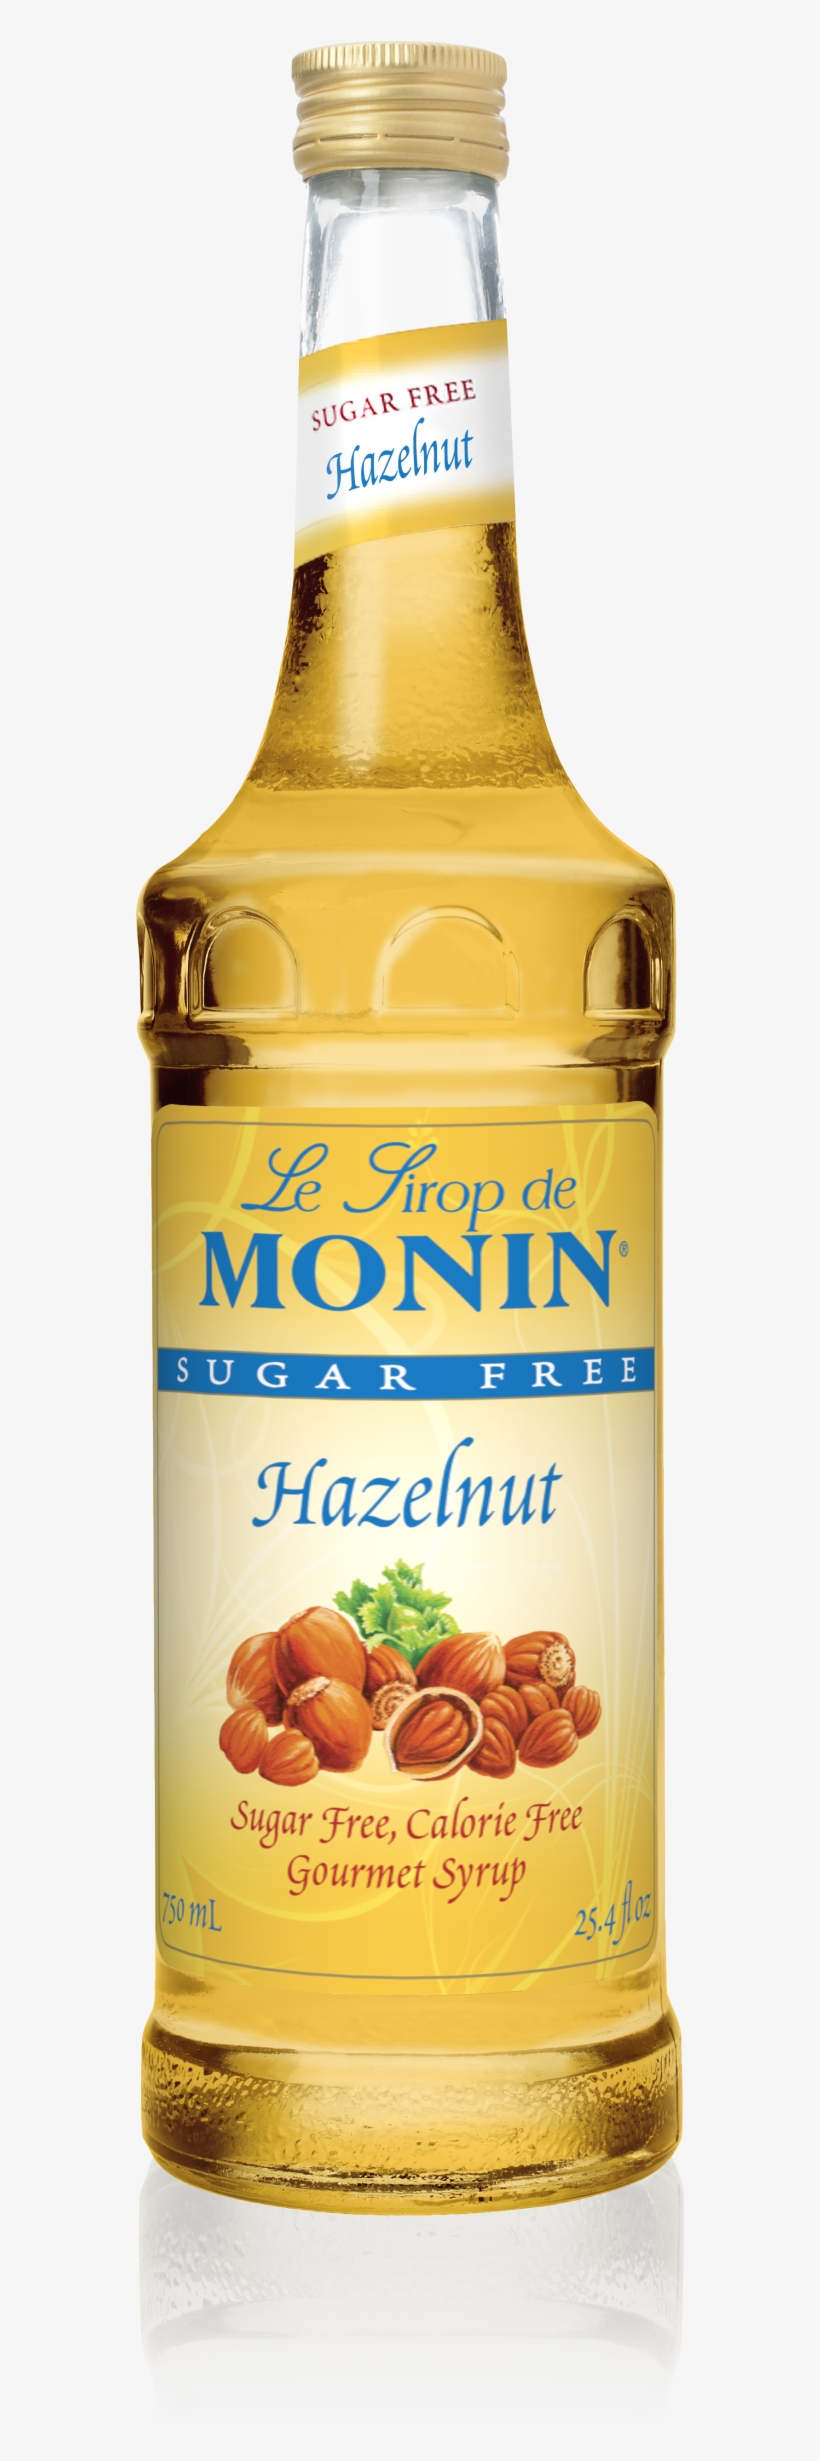 750 Ml Sugar Free Hazelnut Syrup - Monin Apple Syrup, transparent png #9028269